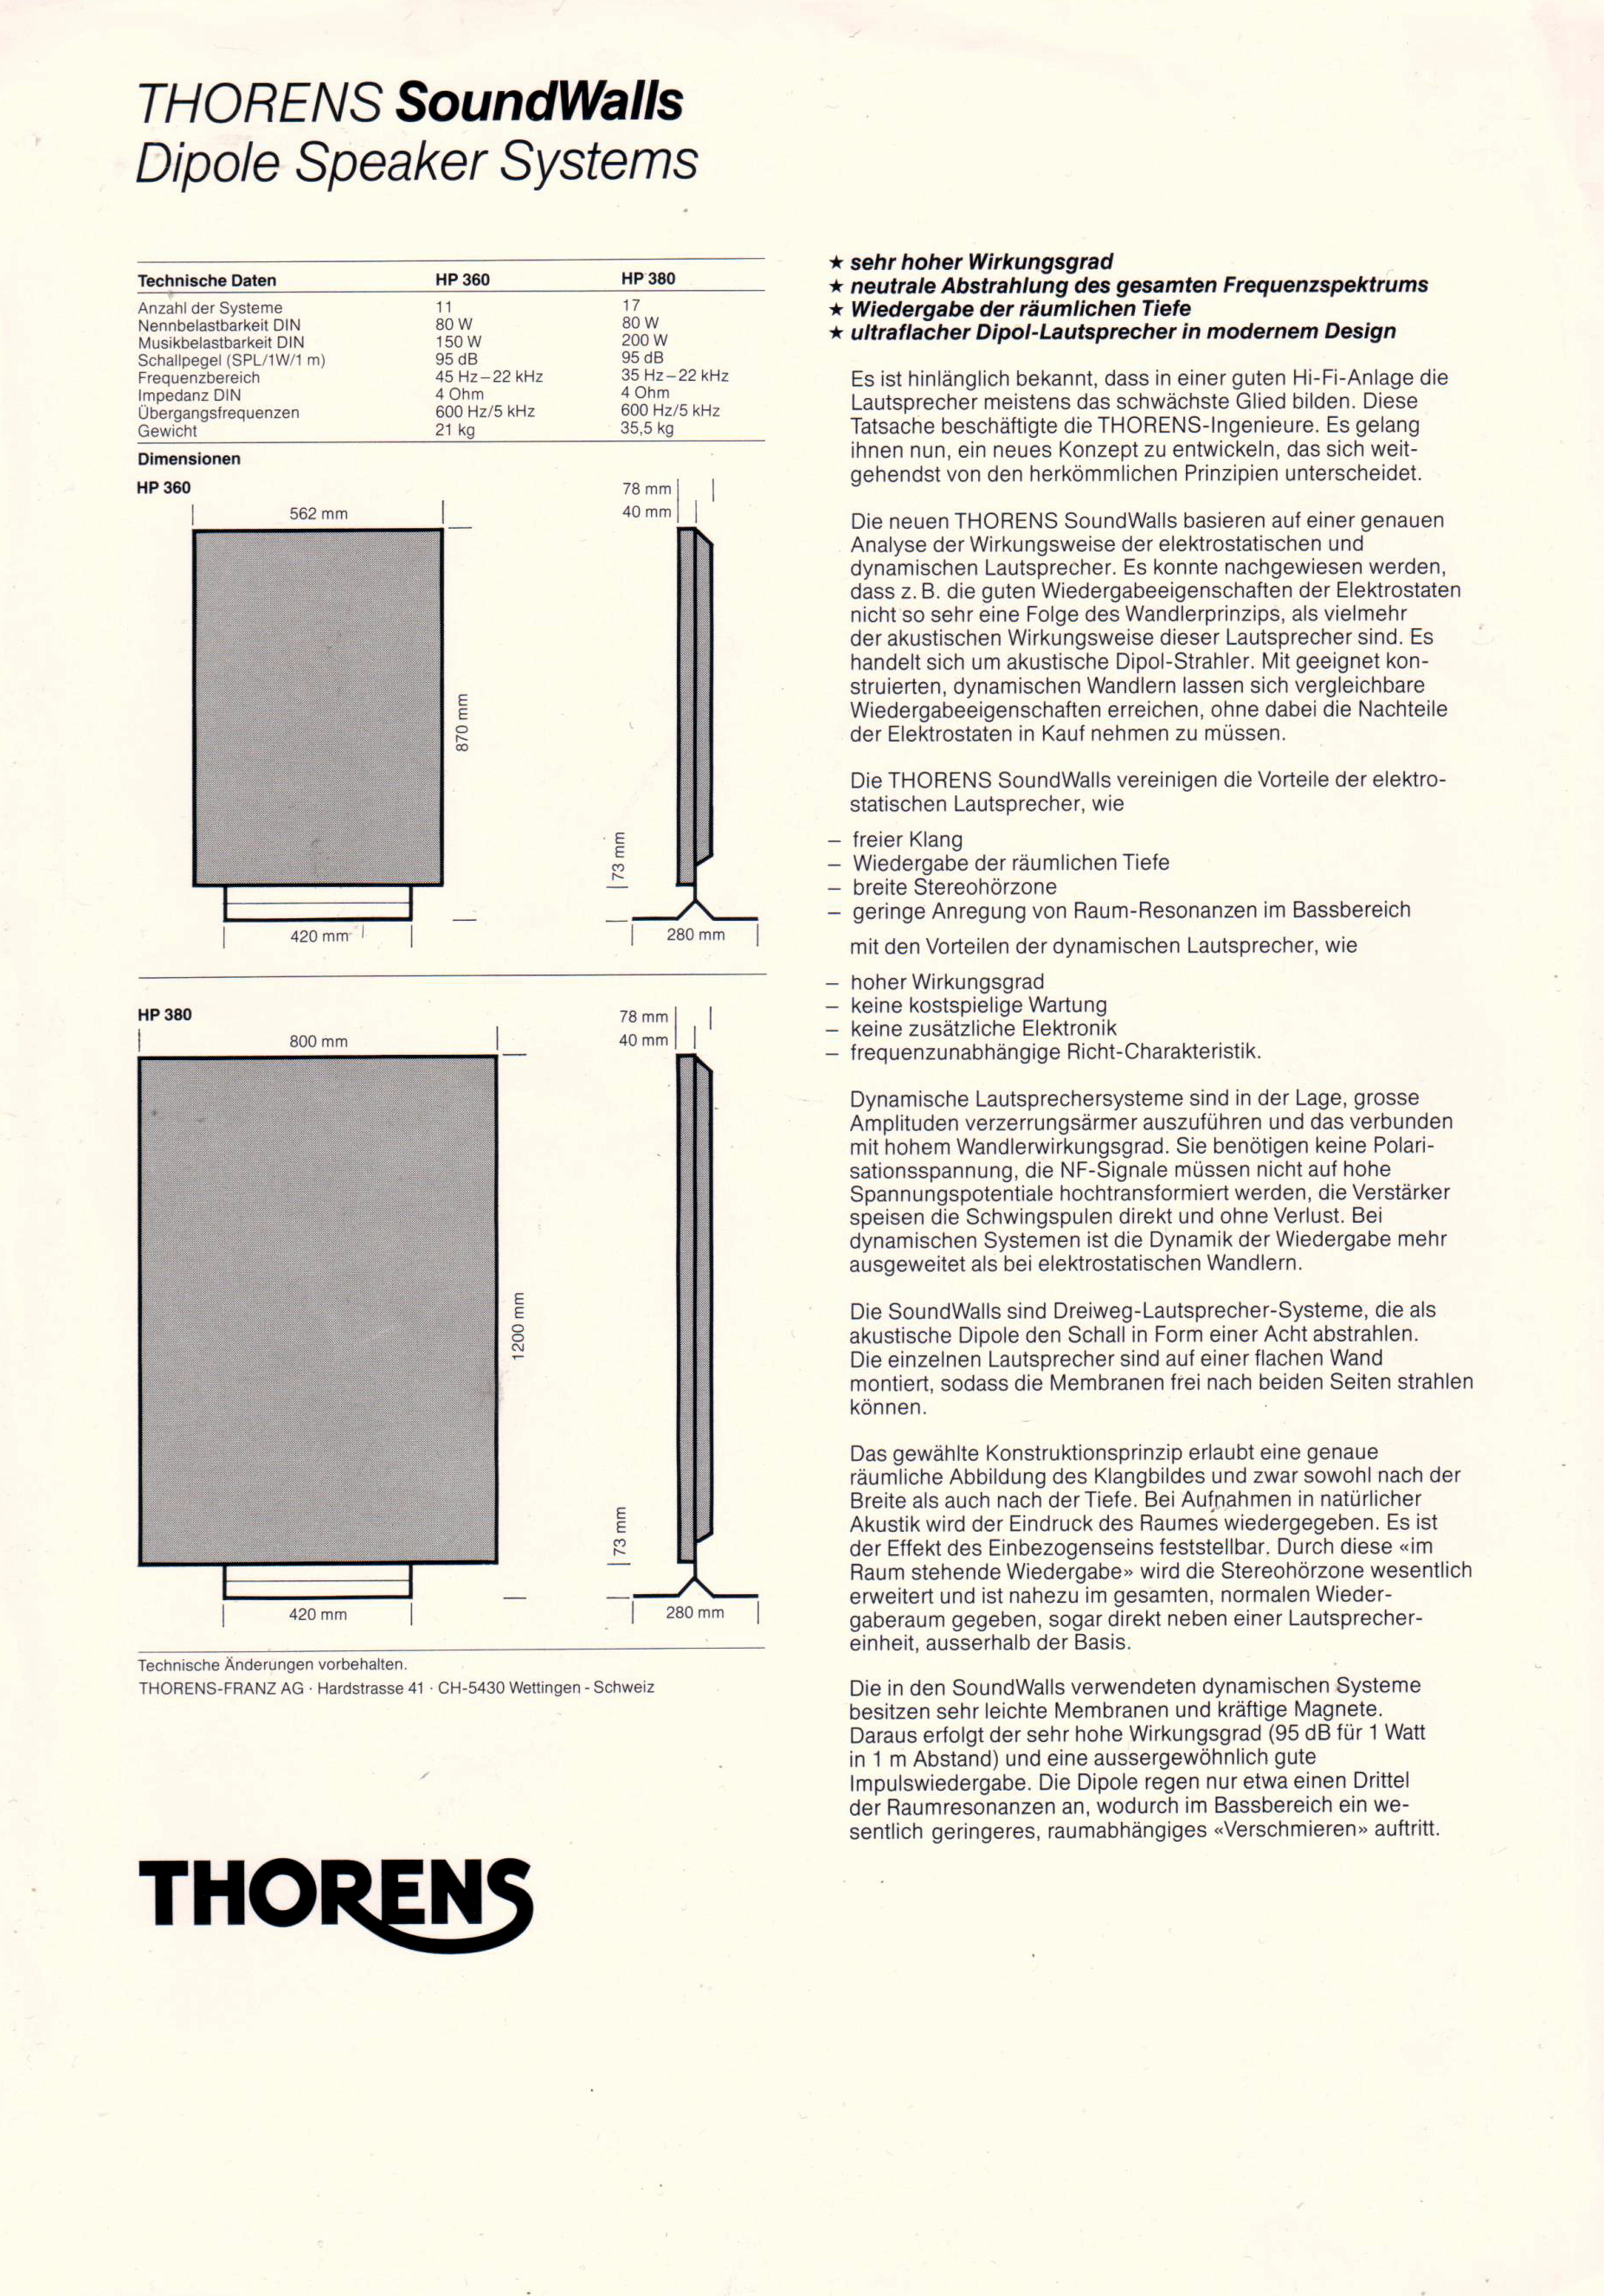 Thorens Soundwall HP-360-380-Prospekt-2.jpg